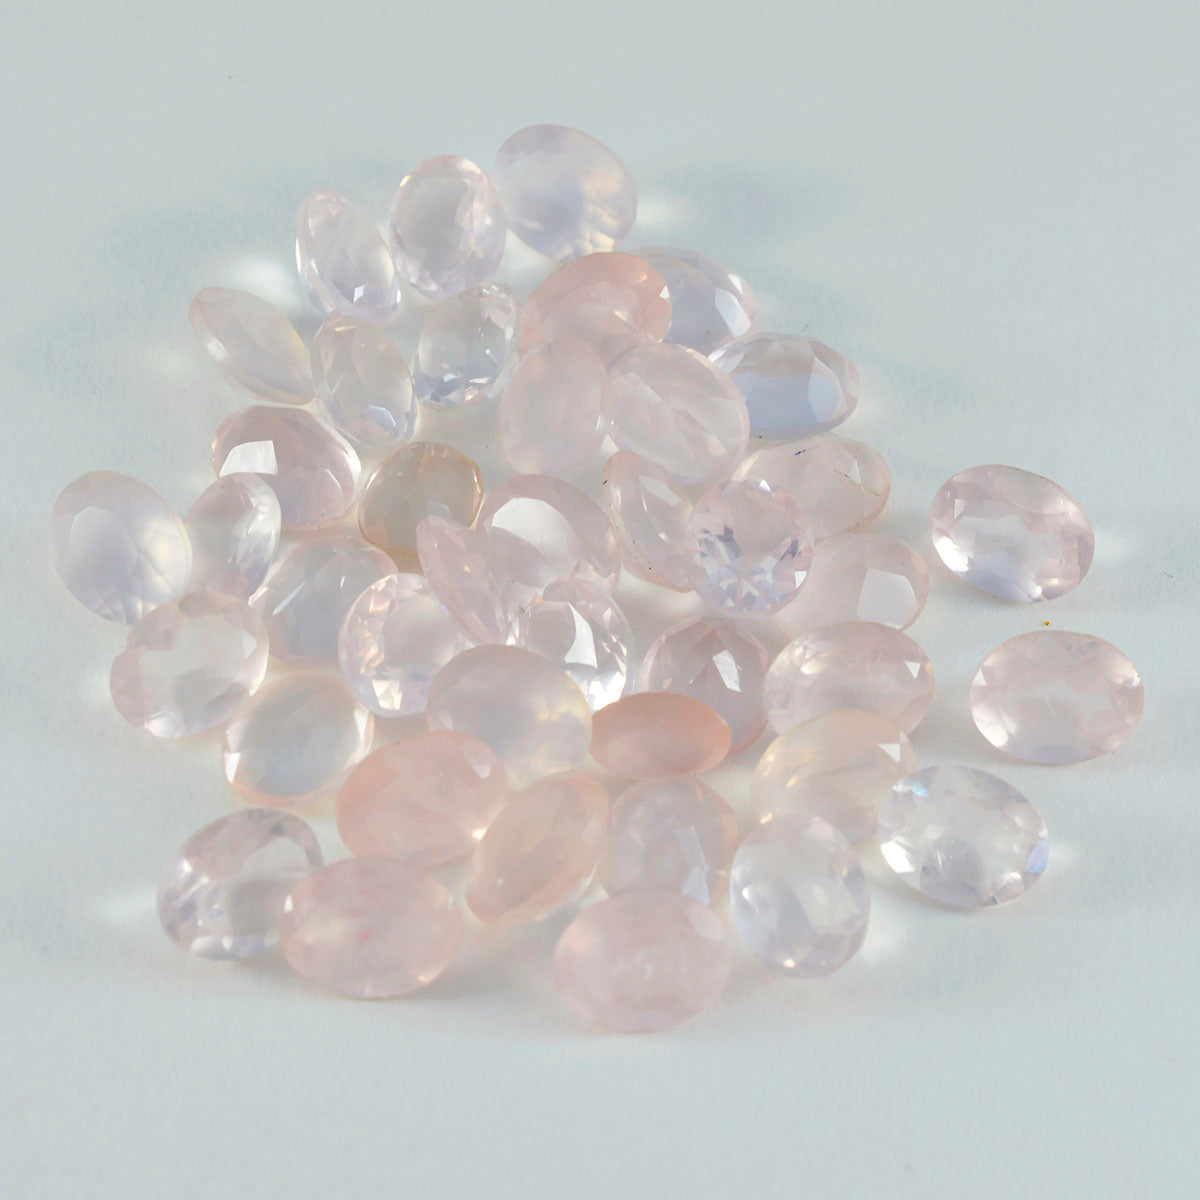 Riyogems 1PC Pink Rose Quartz Faceted 4x6 mm Oval Shape nice-looking Quality Loose Gemstone